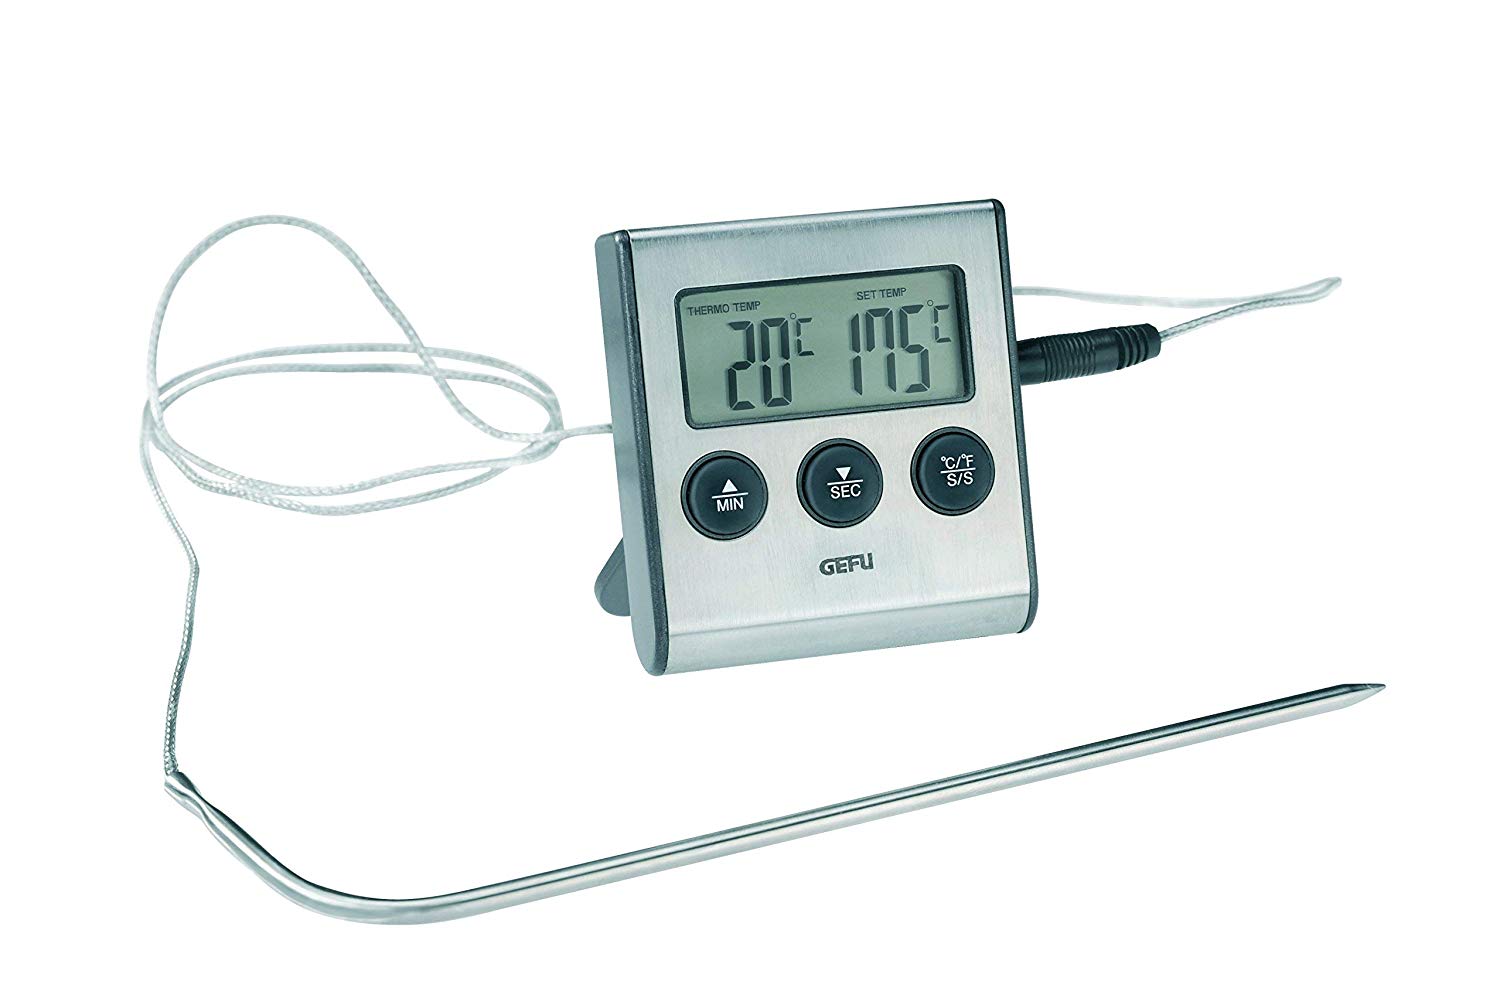 Auto thermometer -Fotos und -Bildmaterial in hoher Auflösung – Alamy